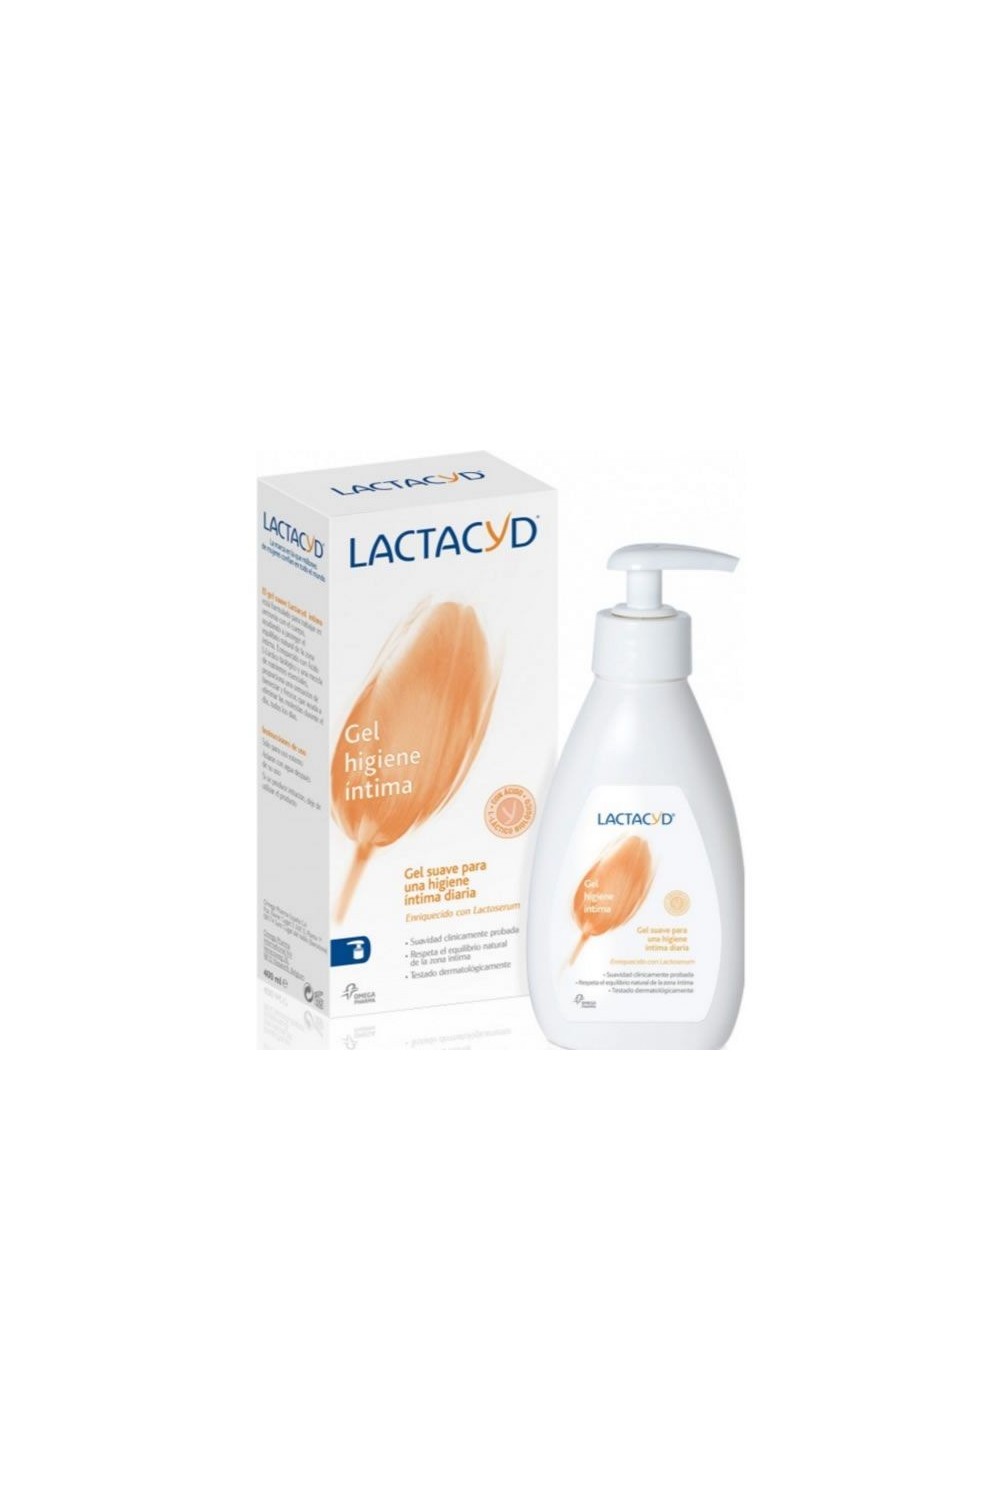 Lactacyd Intimate Washing Lotion 400ml